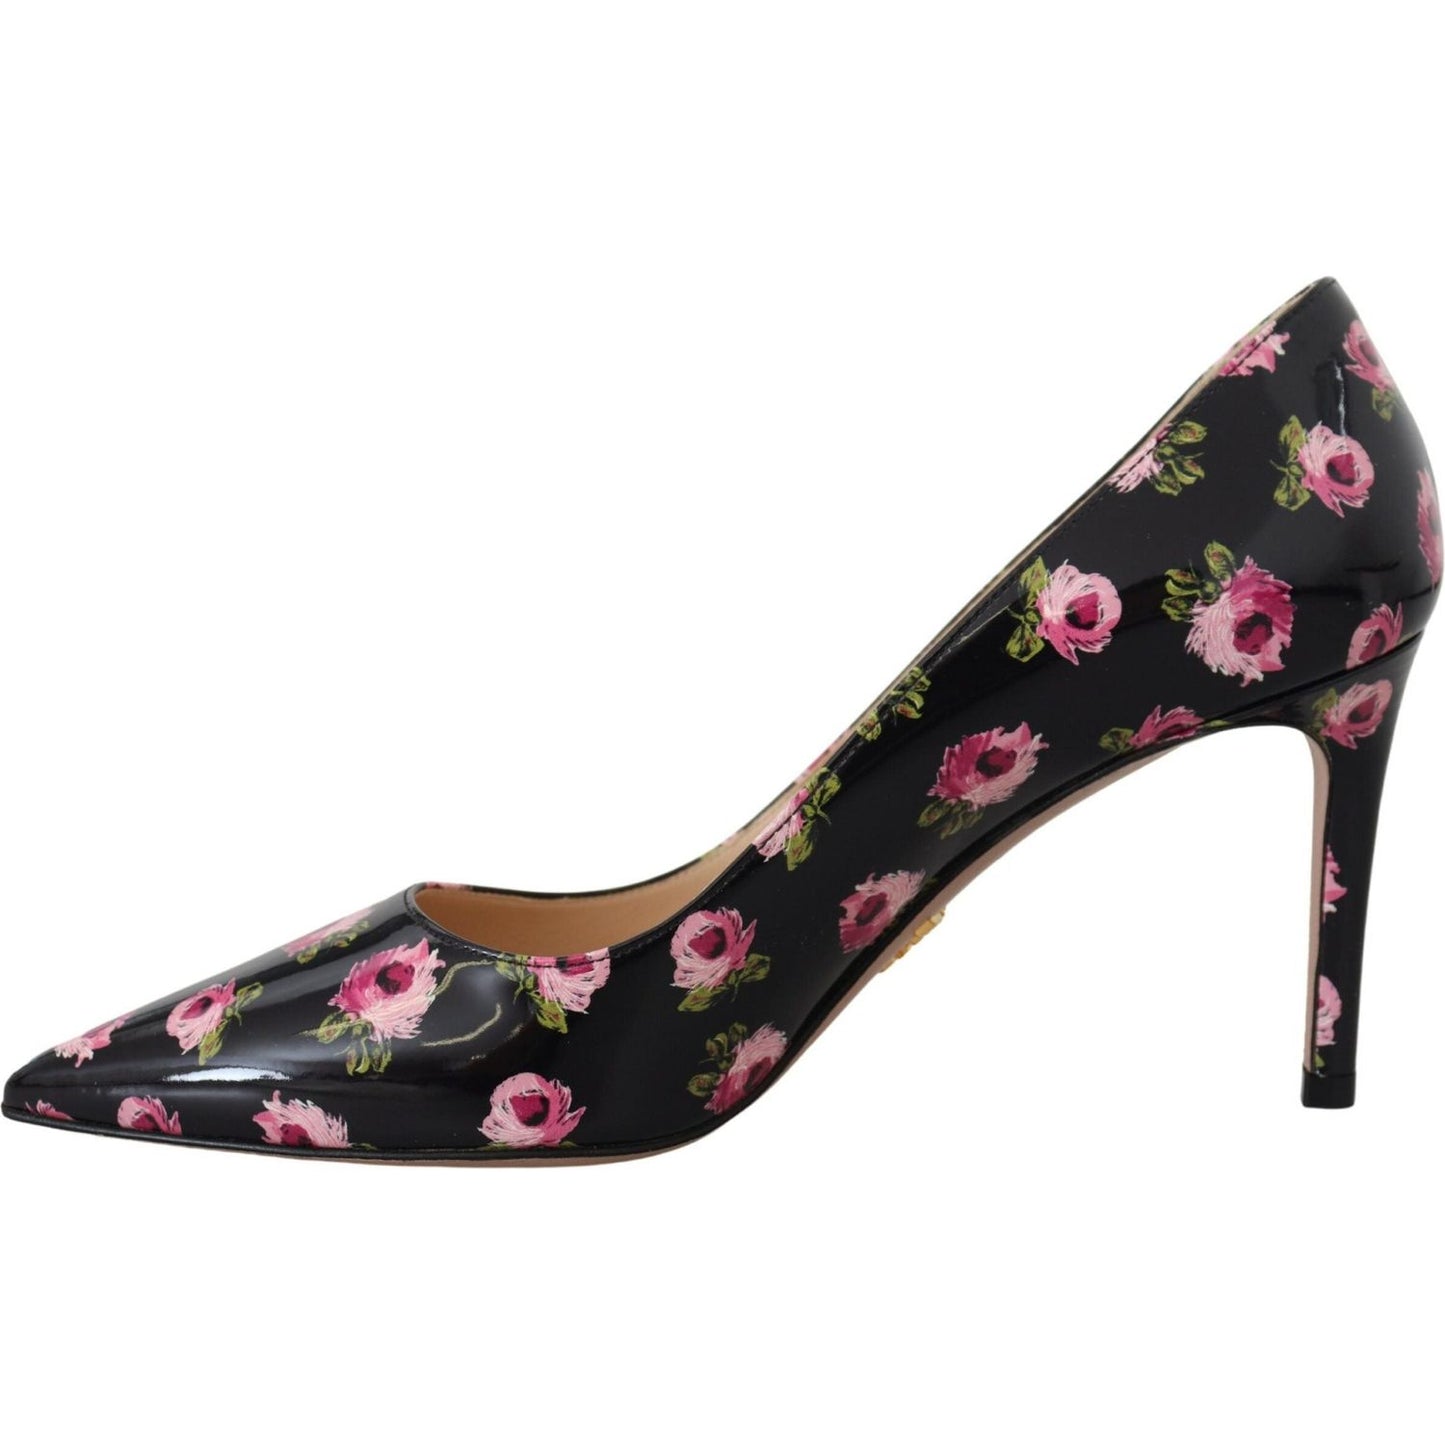 Prada Elegant Floral Print Leather Pumps black-leather-floral-heels-stilettos-pumps IMG_8308-1-scaled-120b3333-5fd.jpg